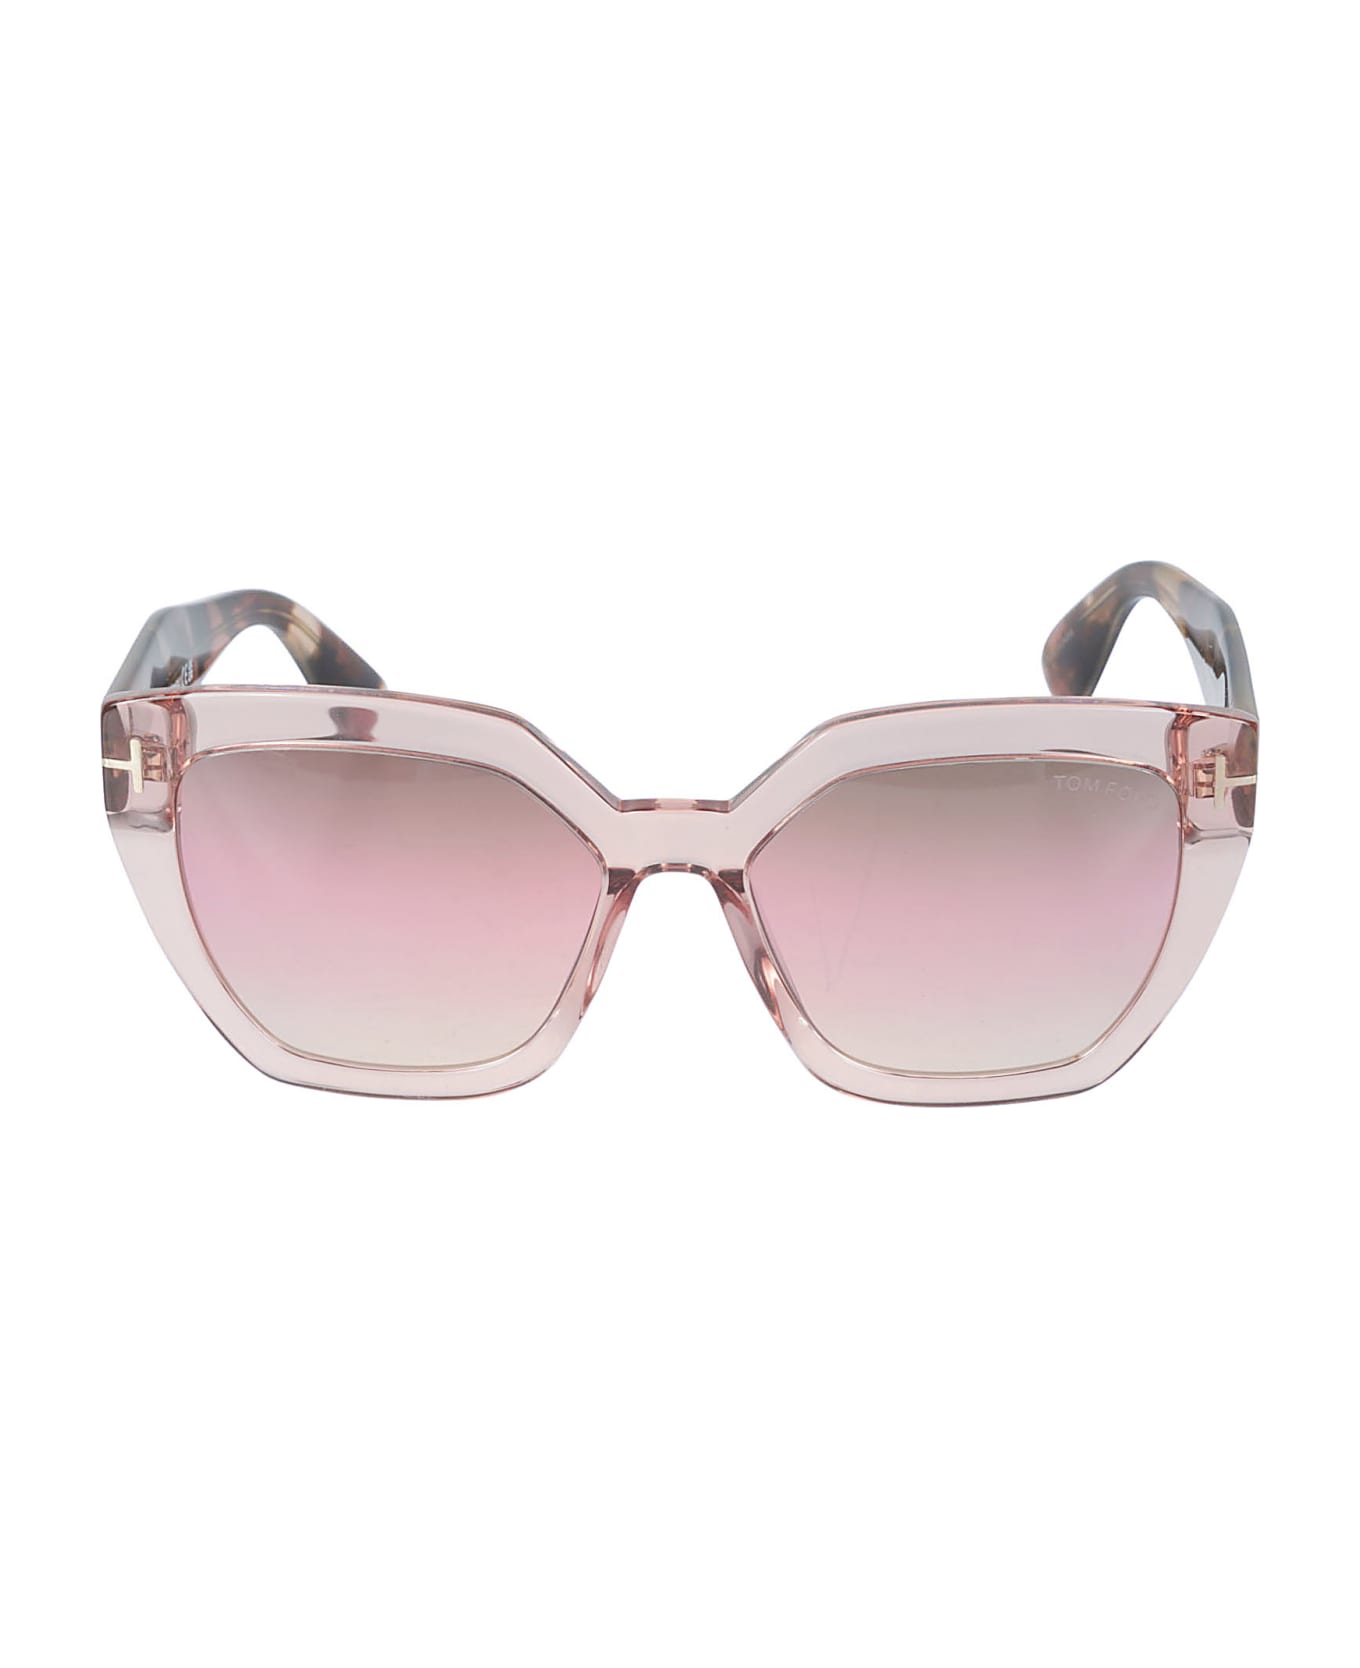 Tom Ford Eyewear Phoebe Sunglasses - 72F